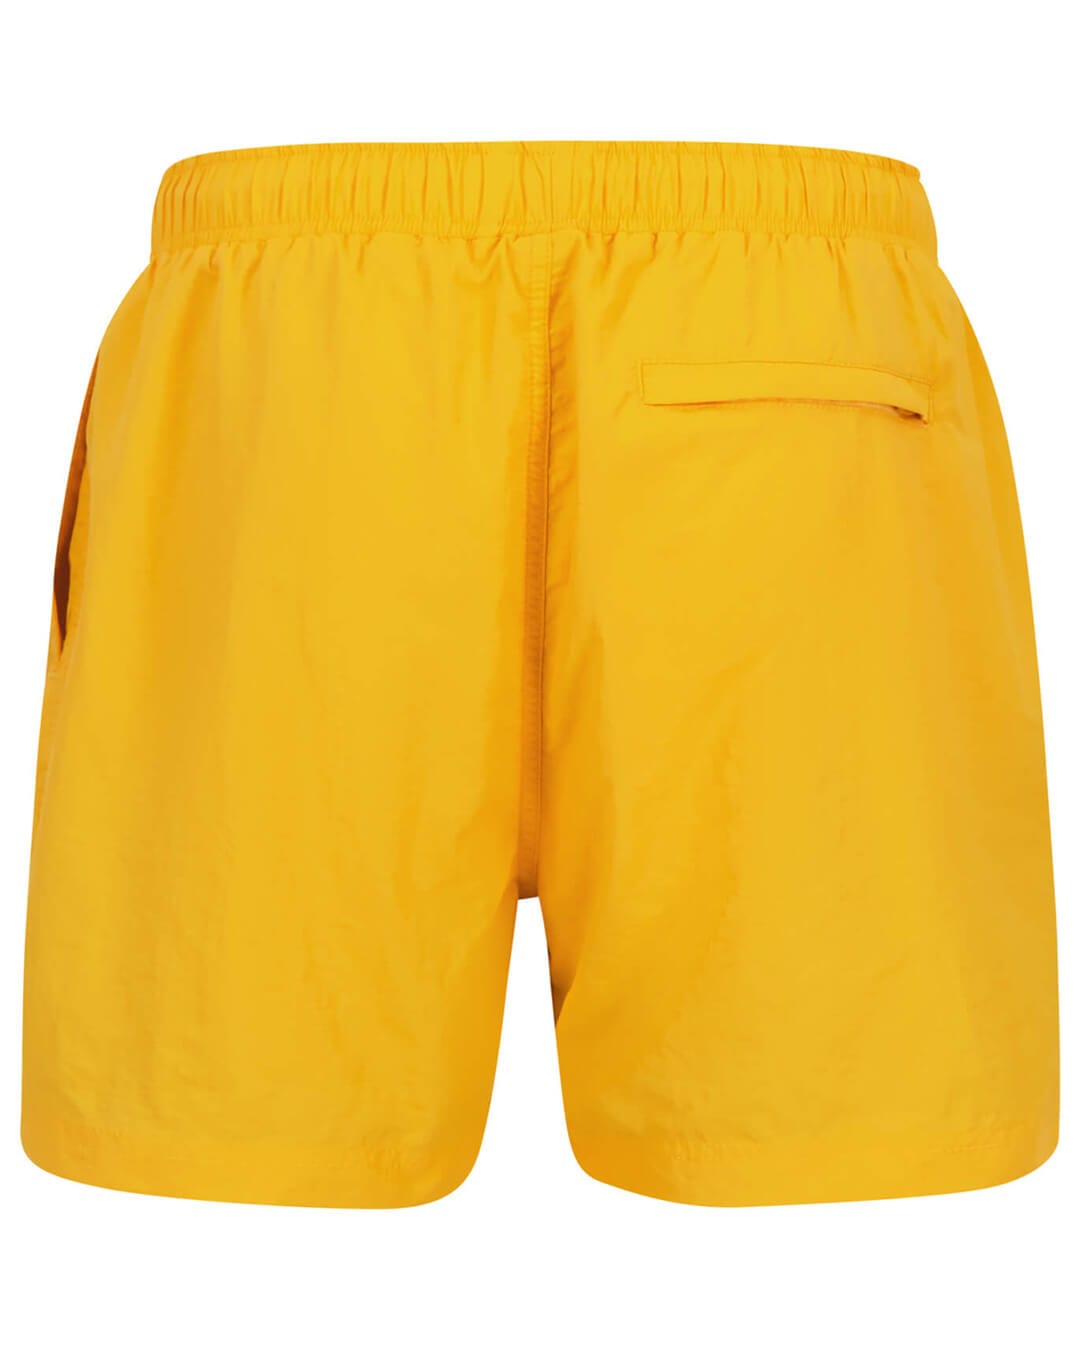 Fynch-Hatton Swimwear Fynch-Hatton Yellow Solid Basic Swimshort